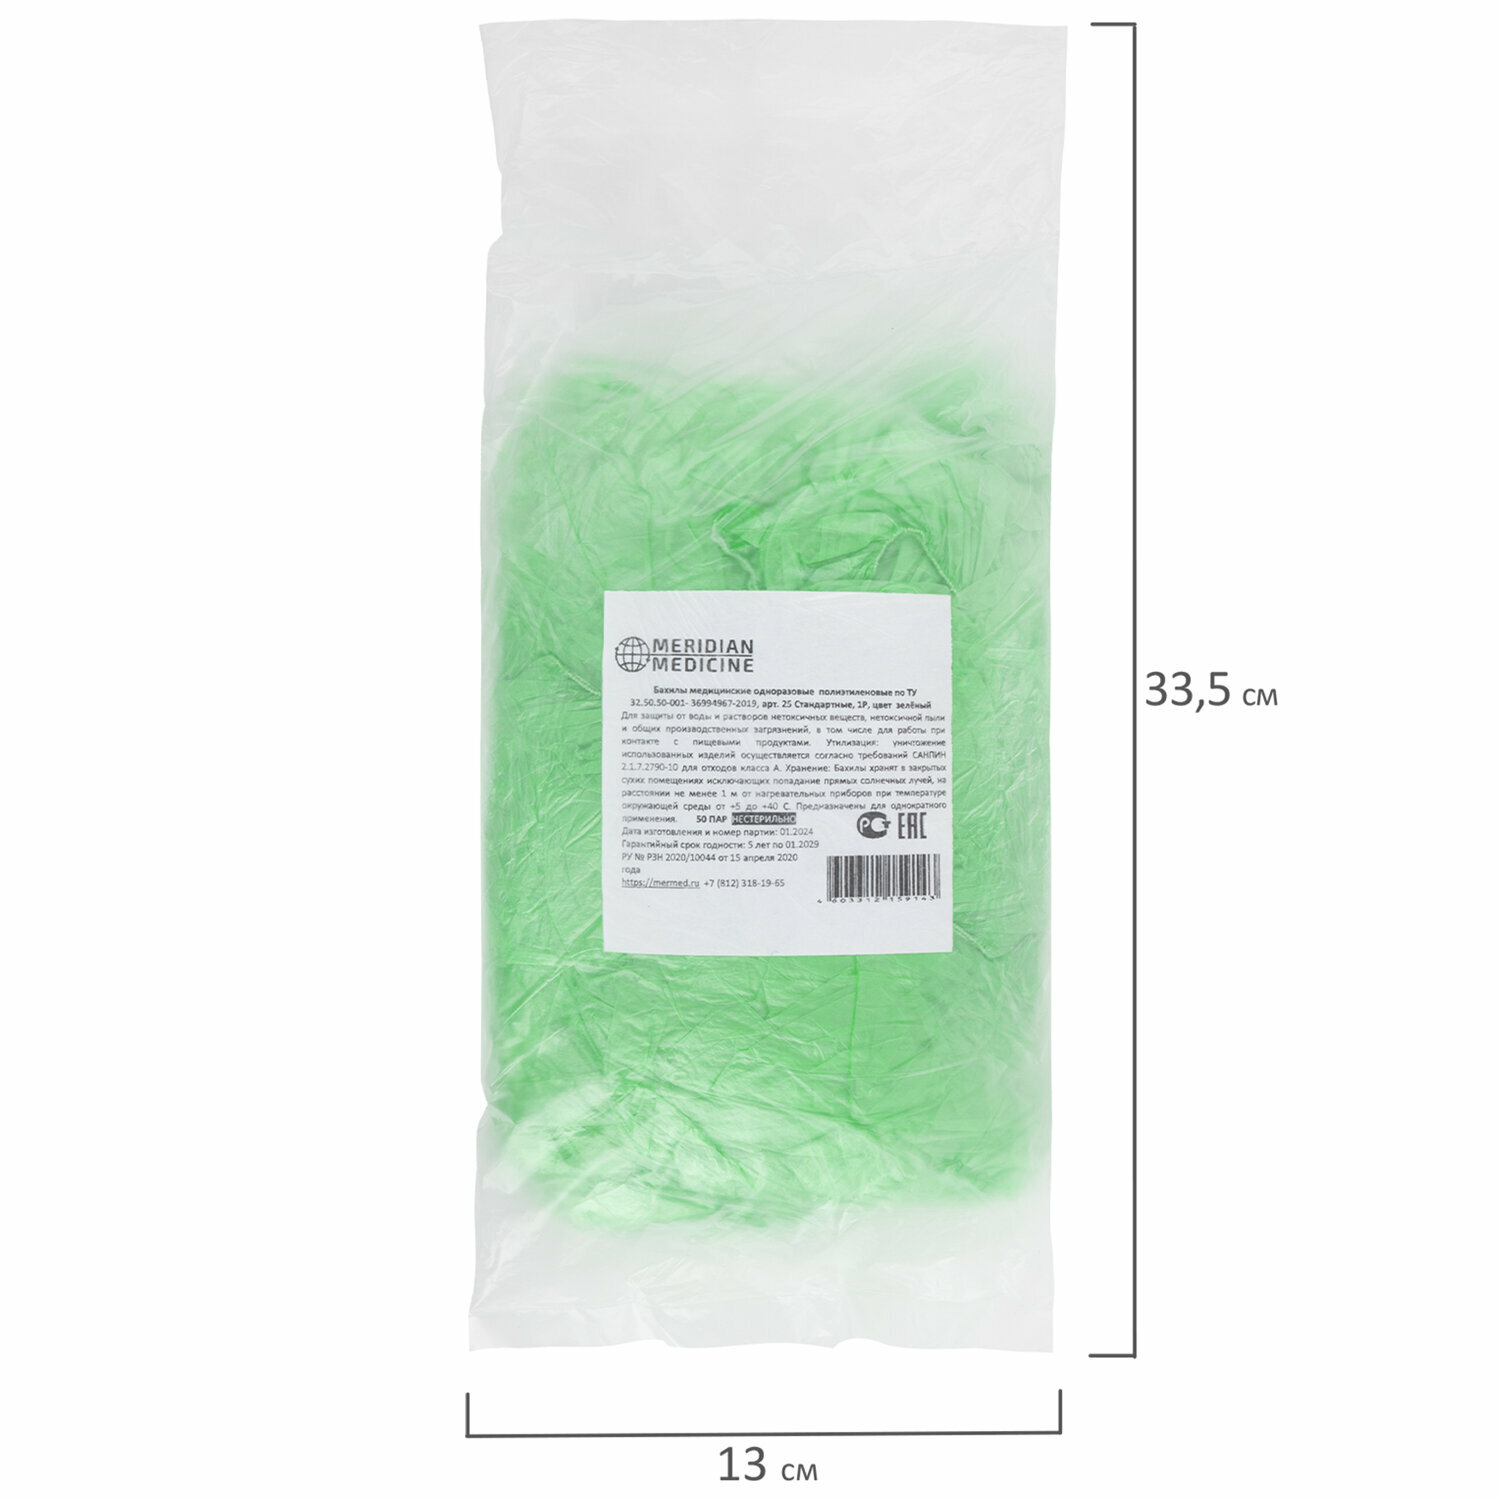 Бахилы MERIDIAN стандарт 2,3 грамма, зеленые, комплект 100 штук (50 пар), 40х15 см, ПНД упаковка 6 шт.